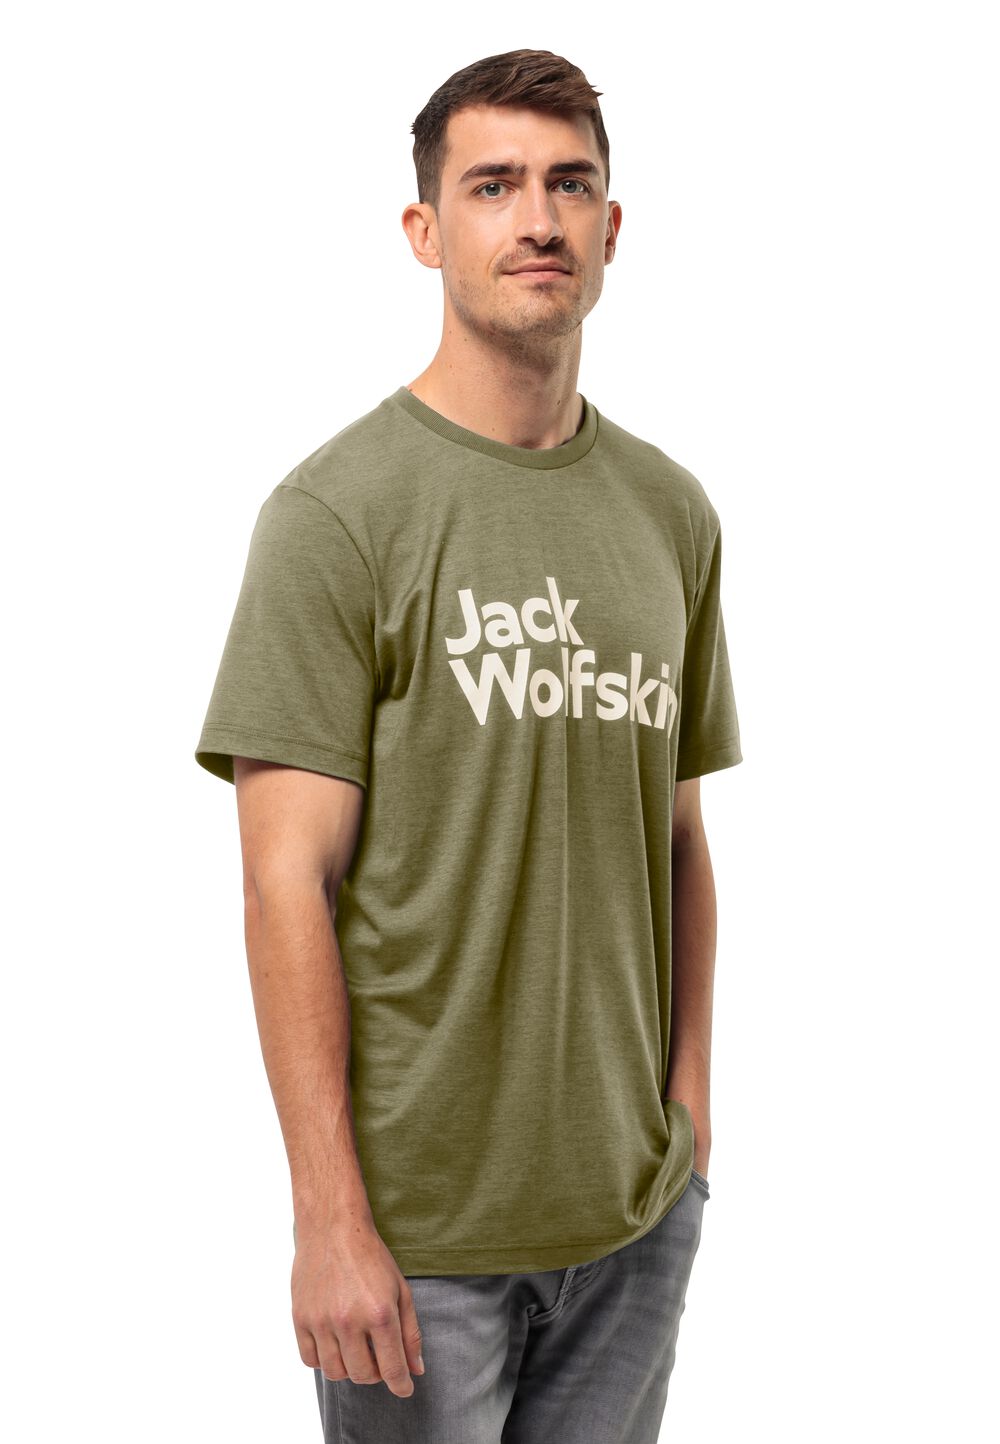 Jack Wolfskin Brand T-Shirt Men Functioneel shirt Heren S bruin bay leaf